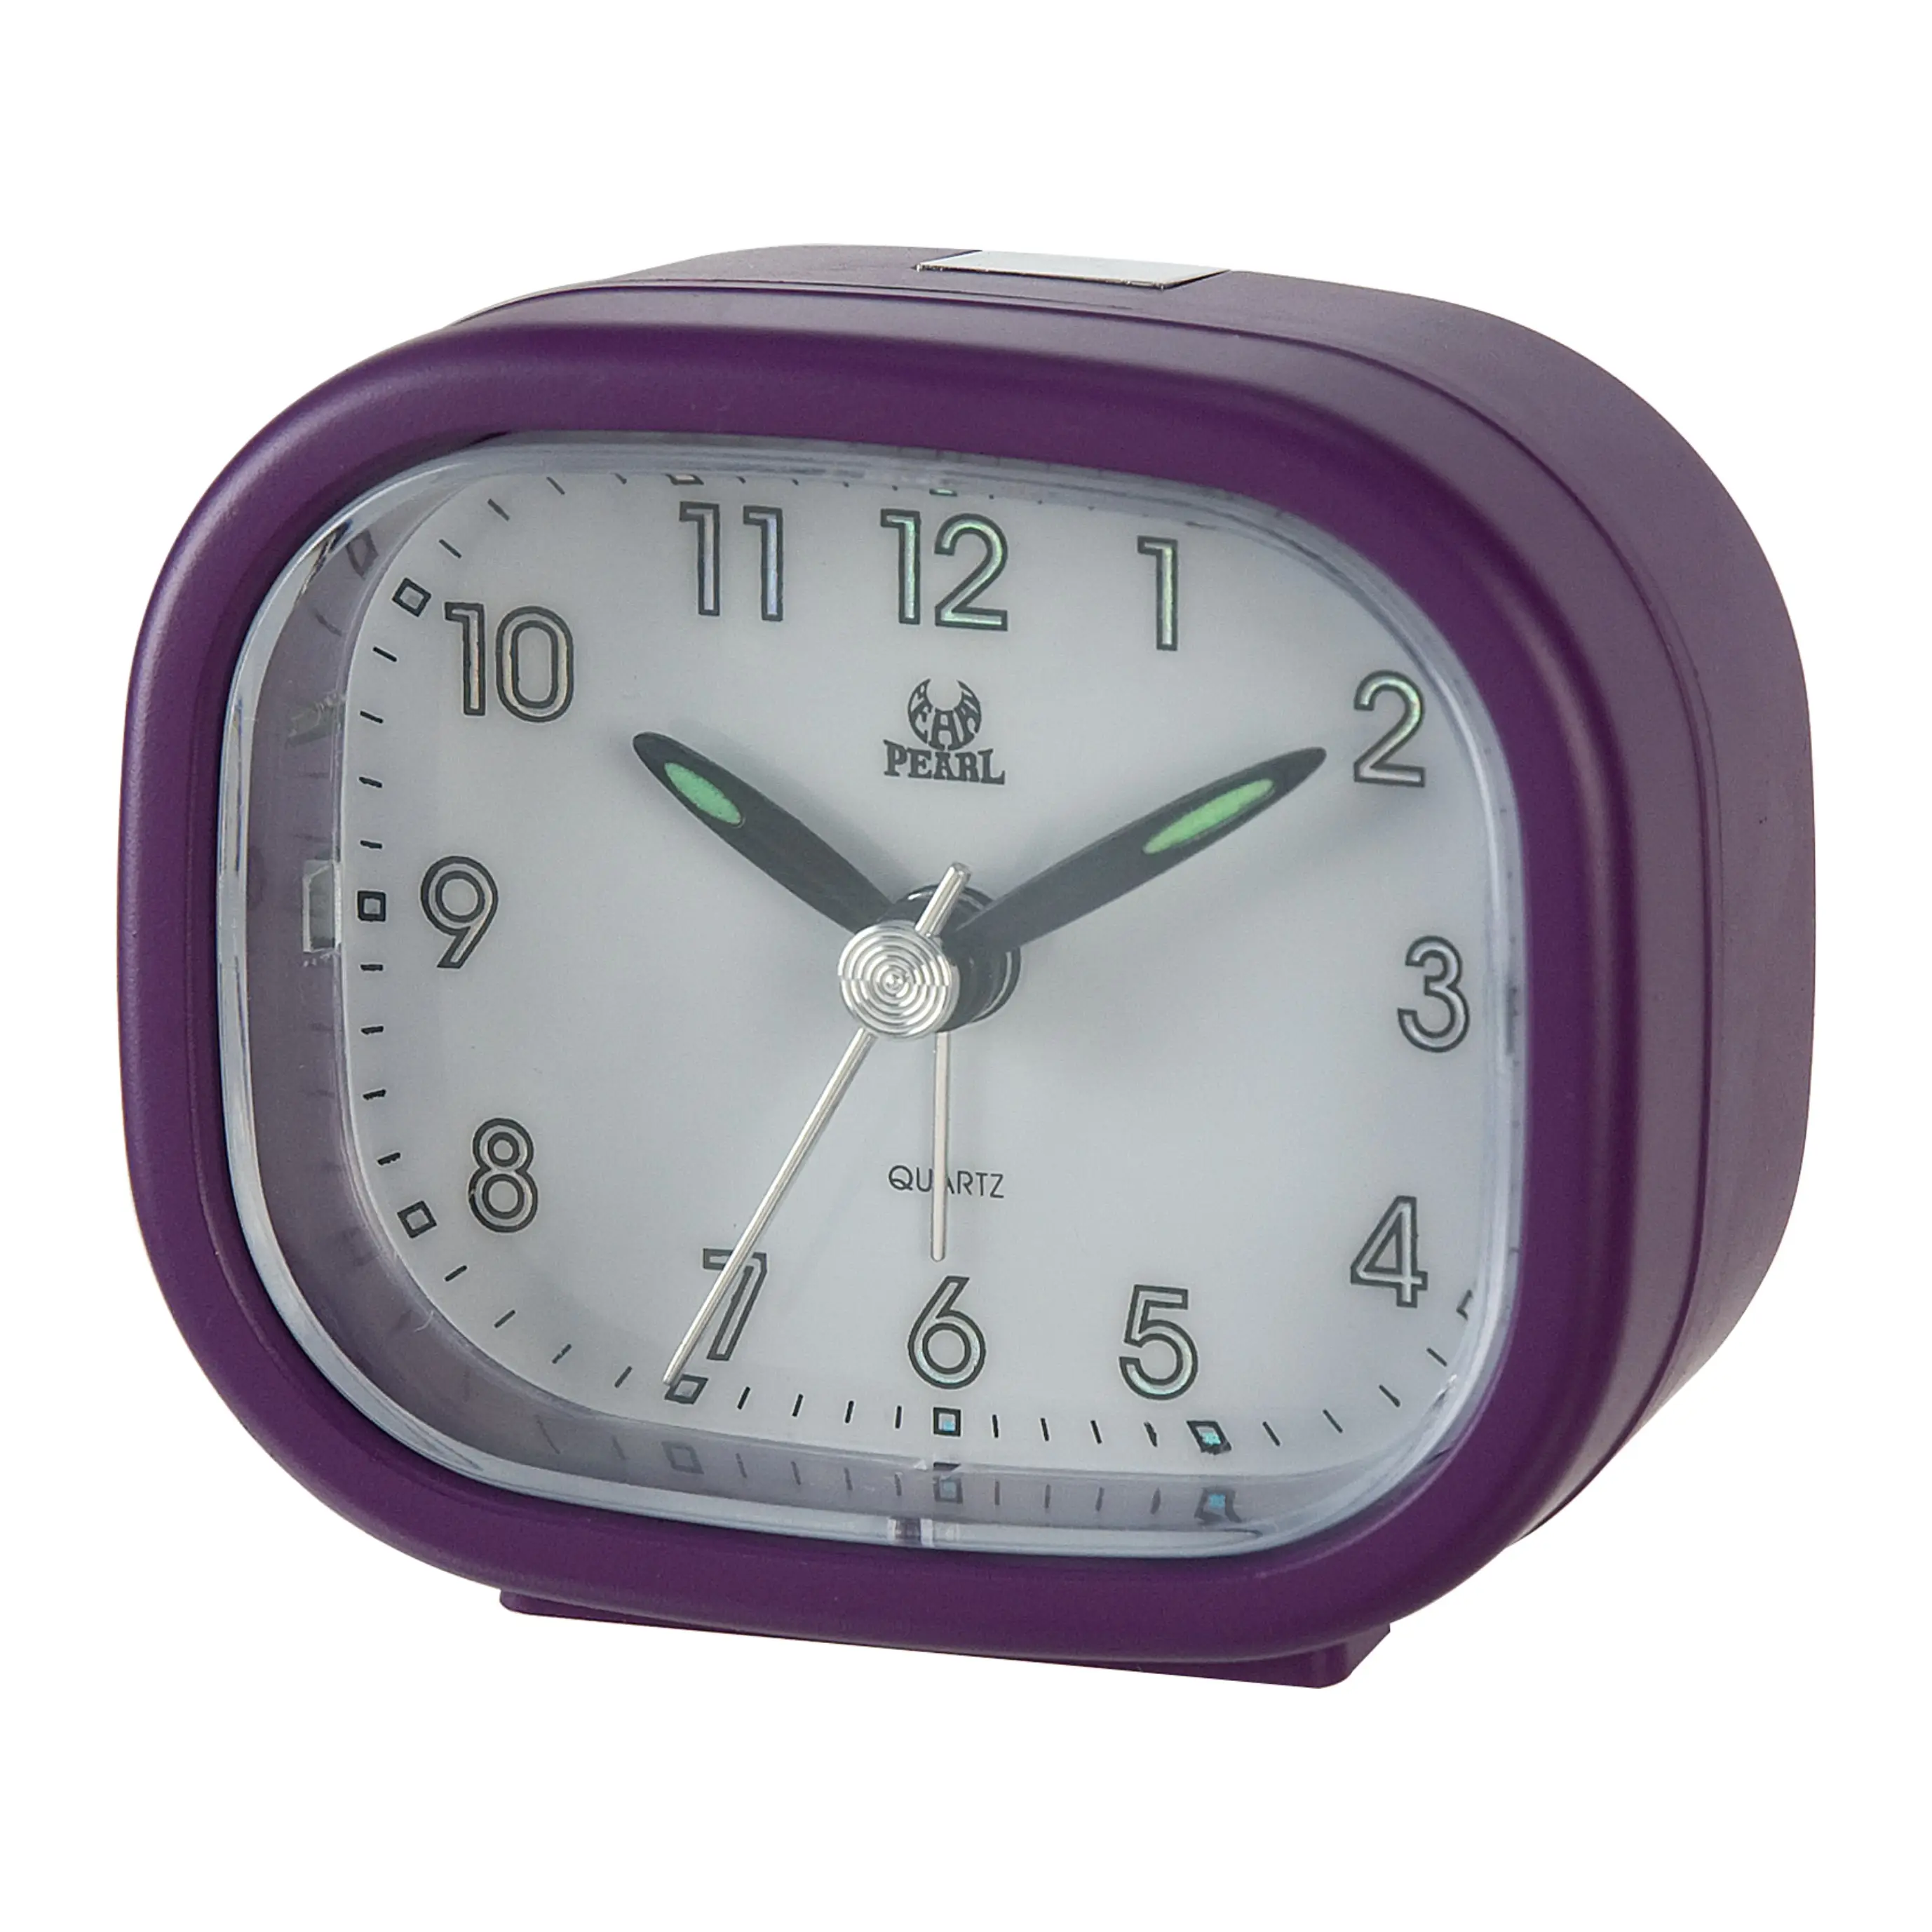 Table quartz alarm clock Desk Case with Backlight Tabletop desktop Travel Mini Small clocks for children gifts display indoor